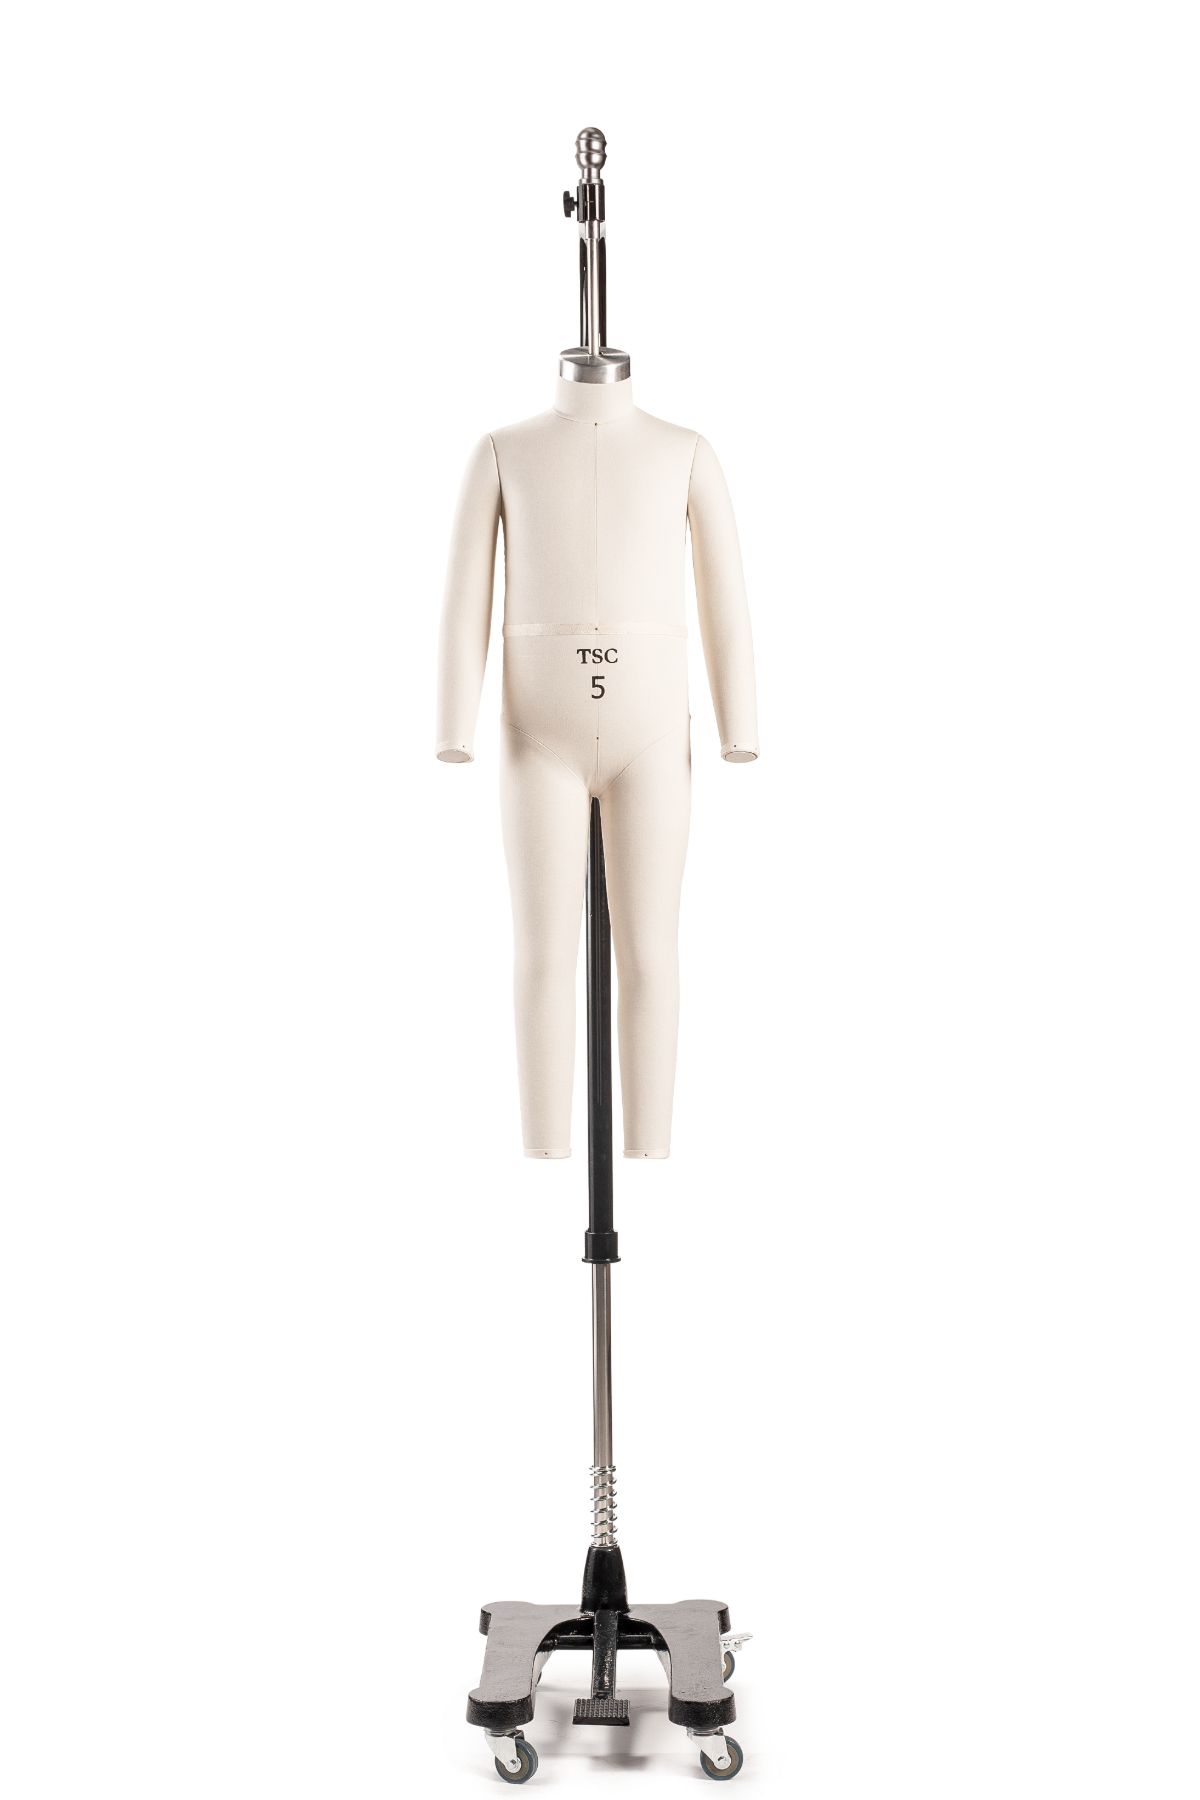 Mannequin Female Full Body Plastic Detachable Mannequin Torso Stand Dress  Form